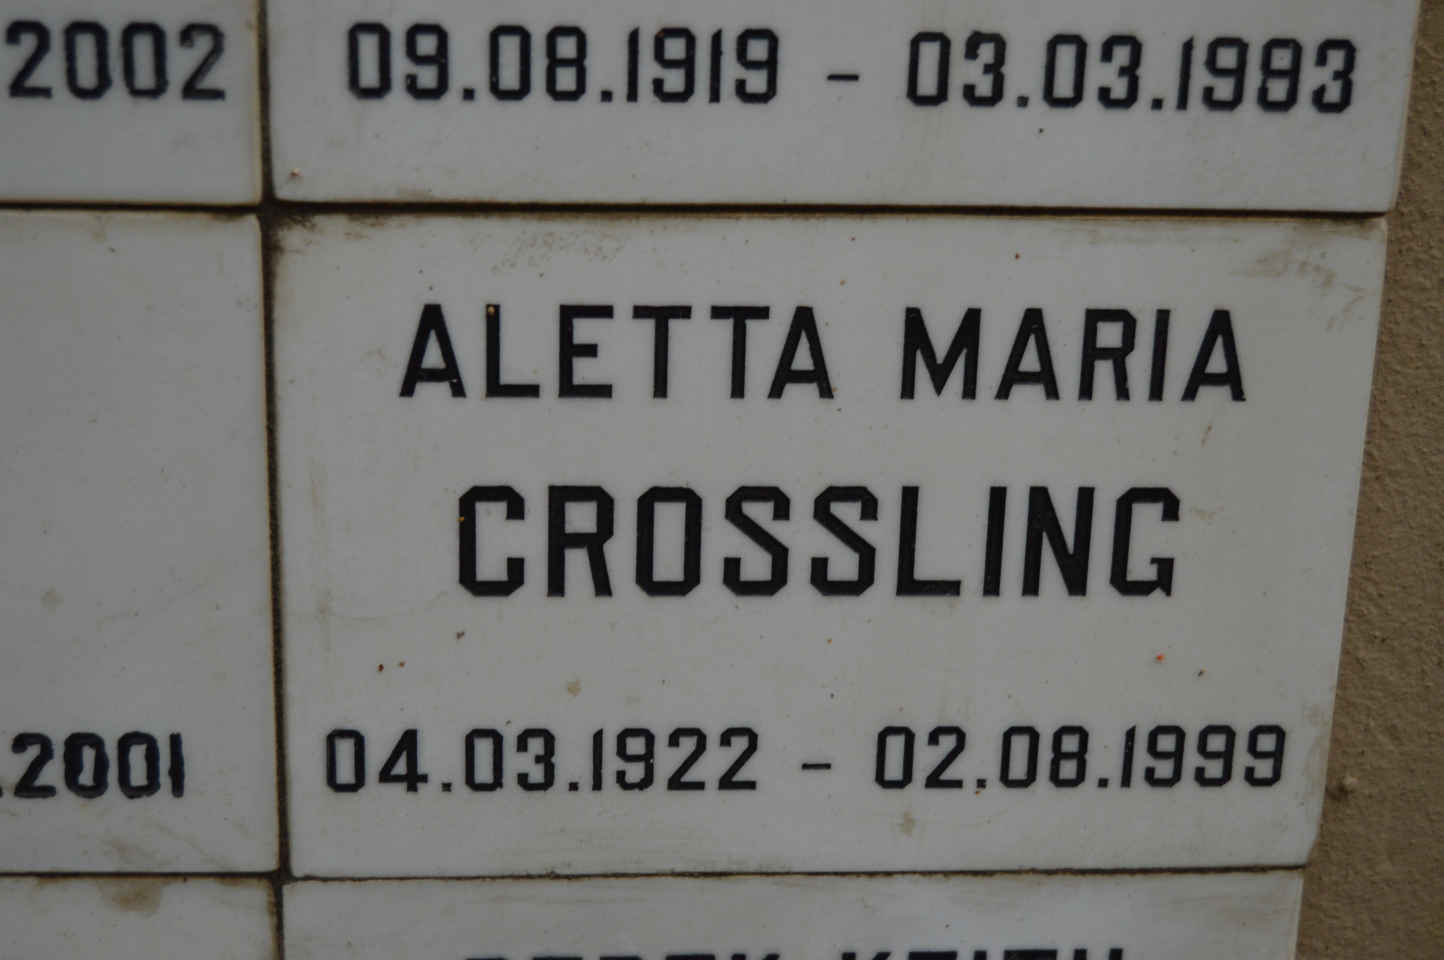 CROSSLING Aletta Maria 1922-1999